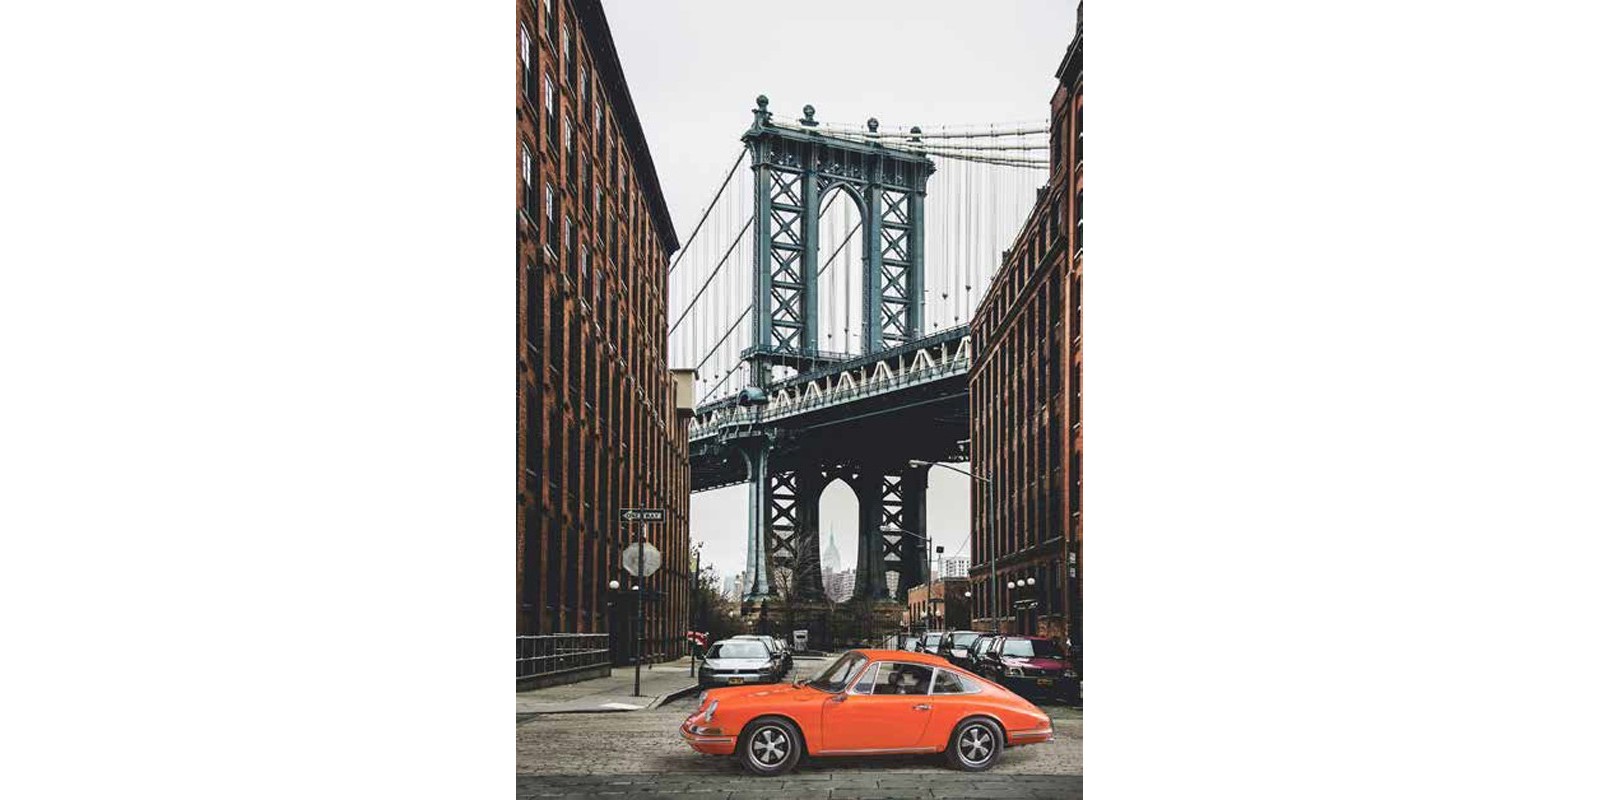 Gasoline Images - By the Manhattan Bridge